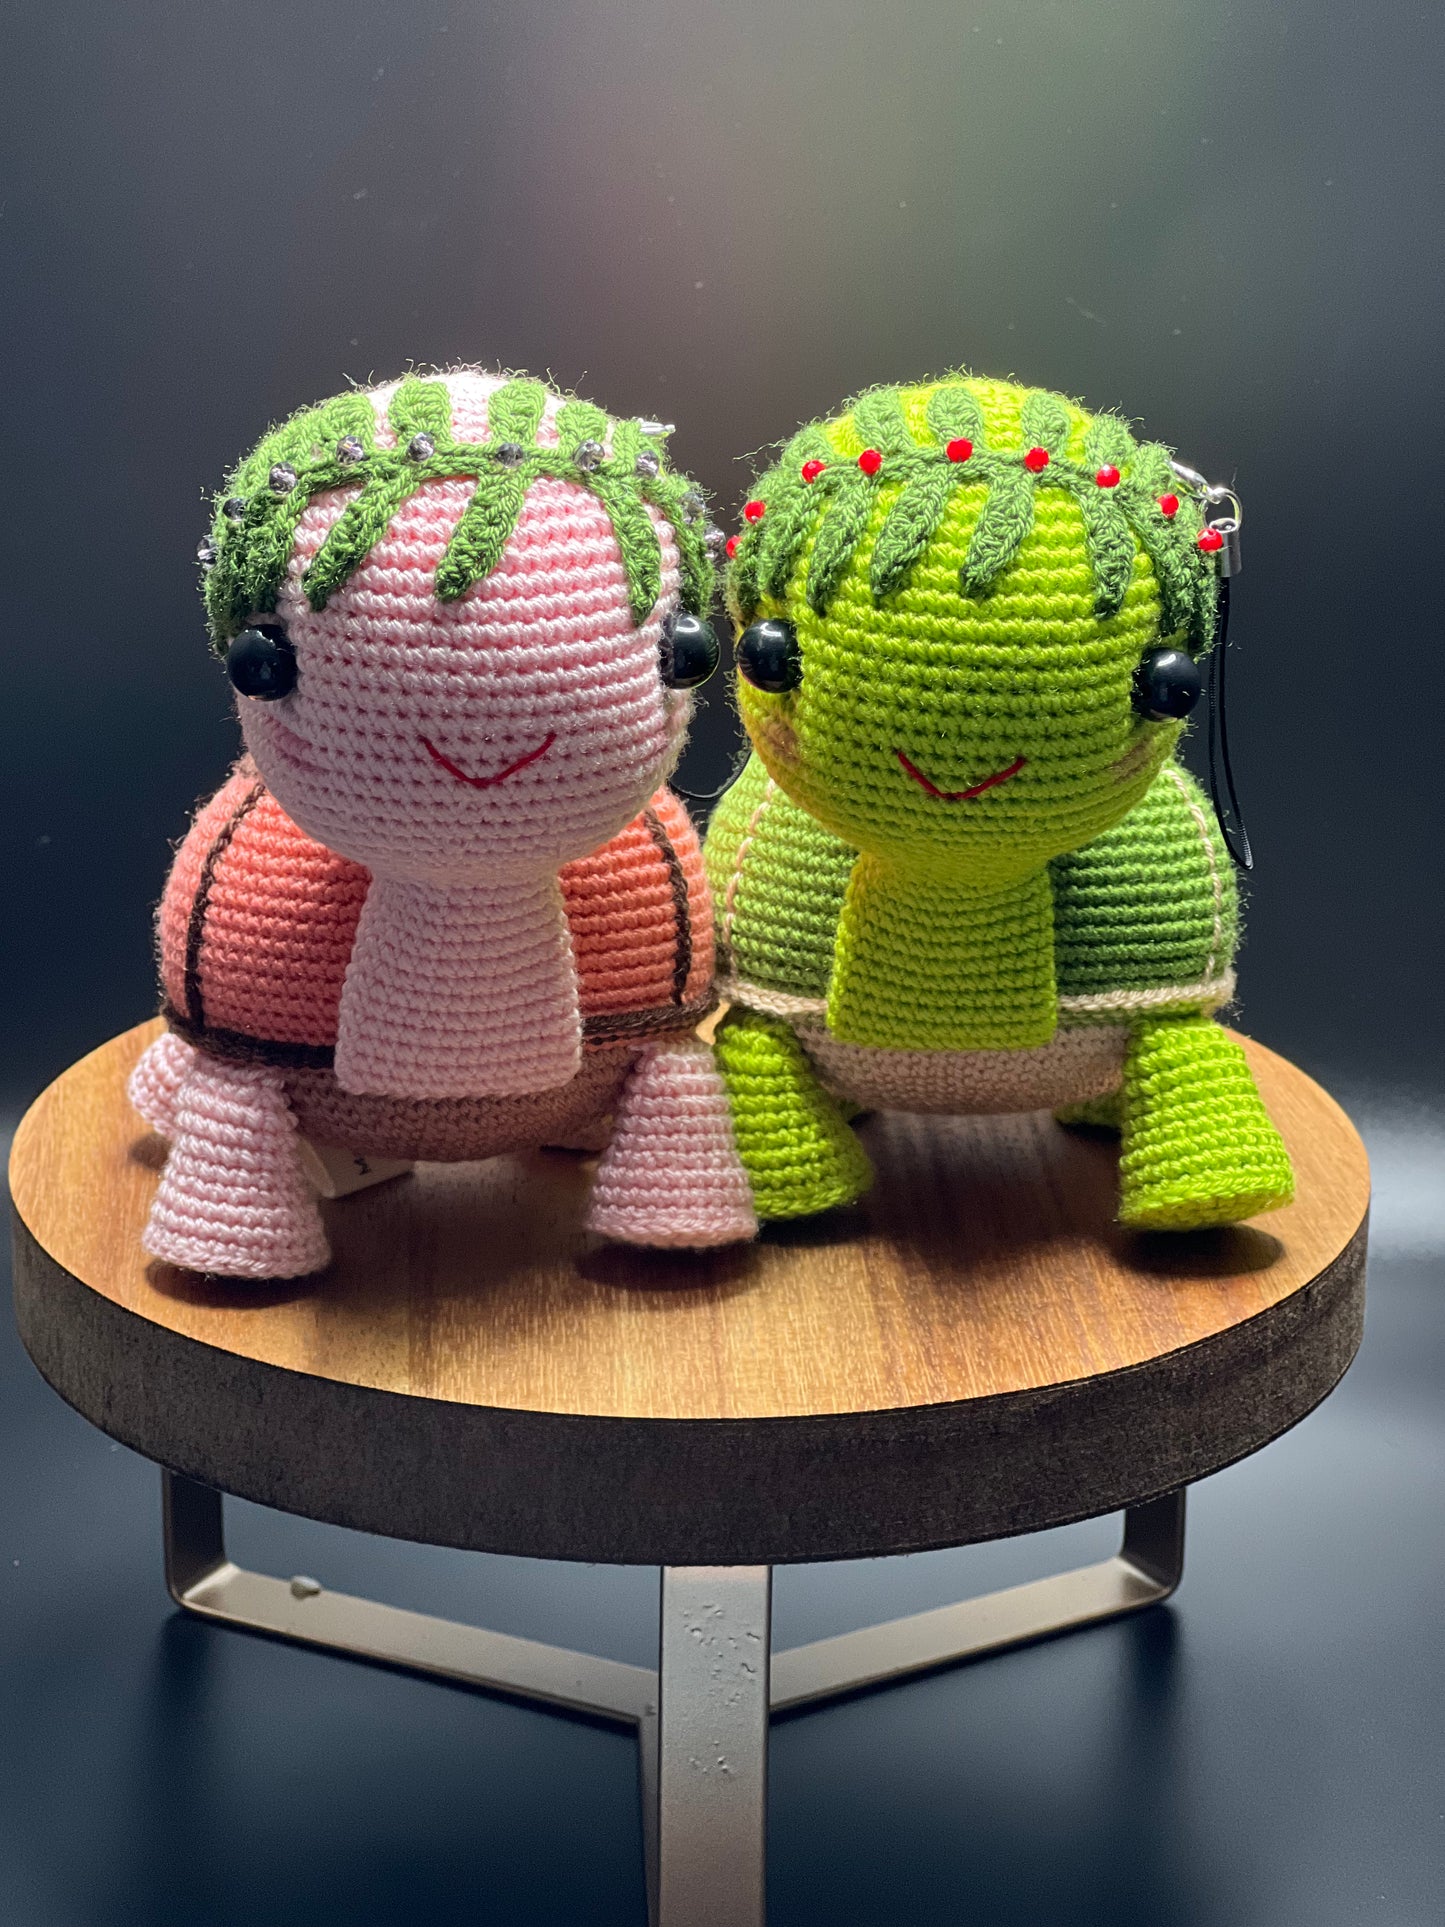 Stuffed Turtle Toy - Crochet Knitted Amigurumi Toy